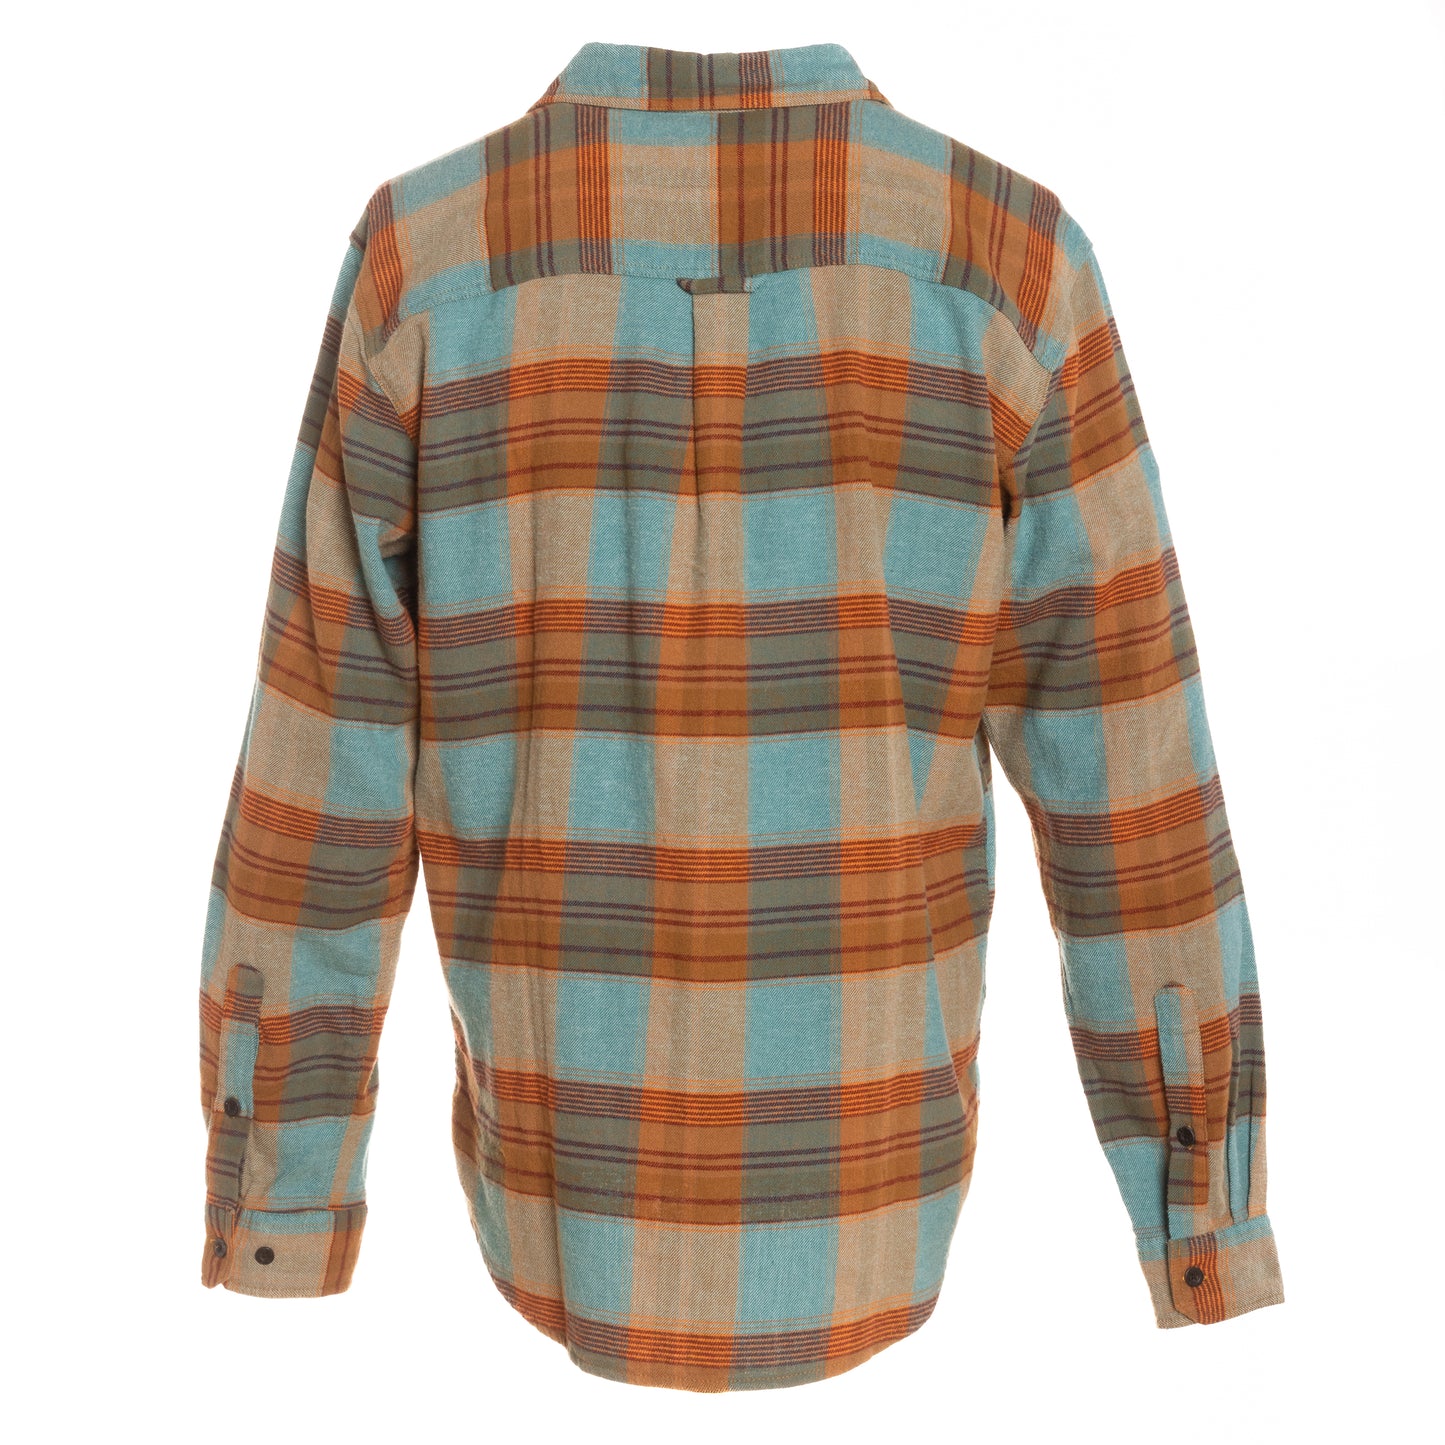 Men's Flannel Shirt - Modern Fit - 5 OZ Woolly Dry Goods